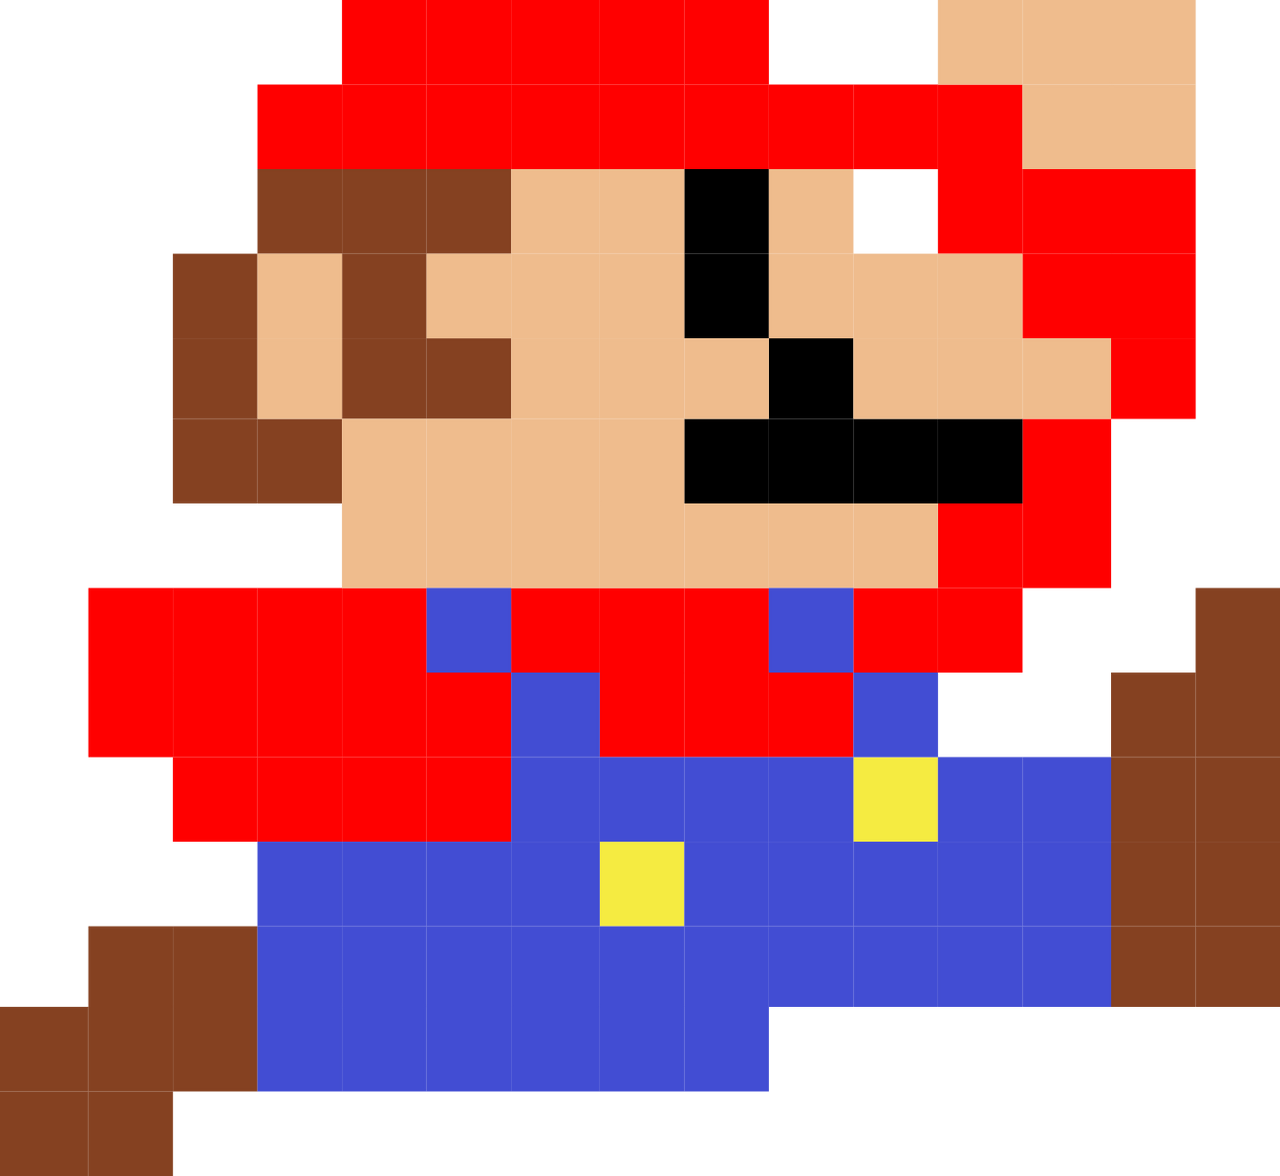 Луиджи Марио 8 бит. Марио пиксель персонажи. Марио БРОС 8 бит. Персонаж Марио пиксельный.